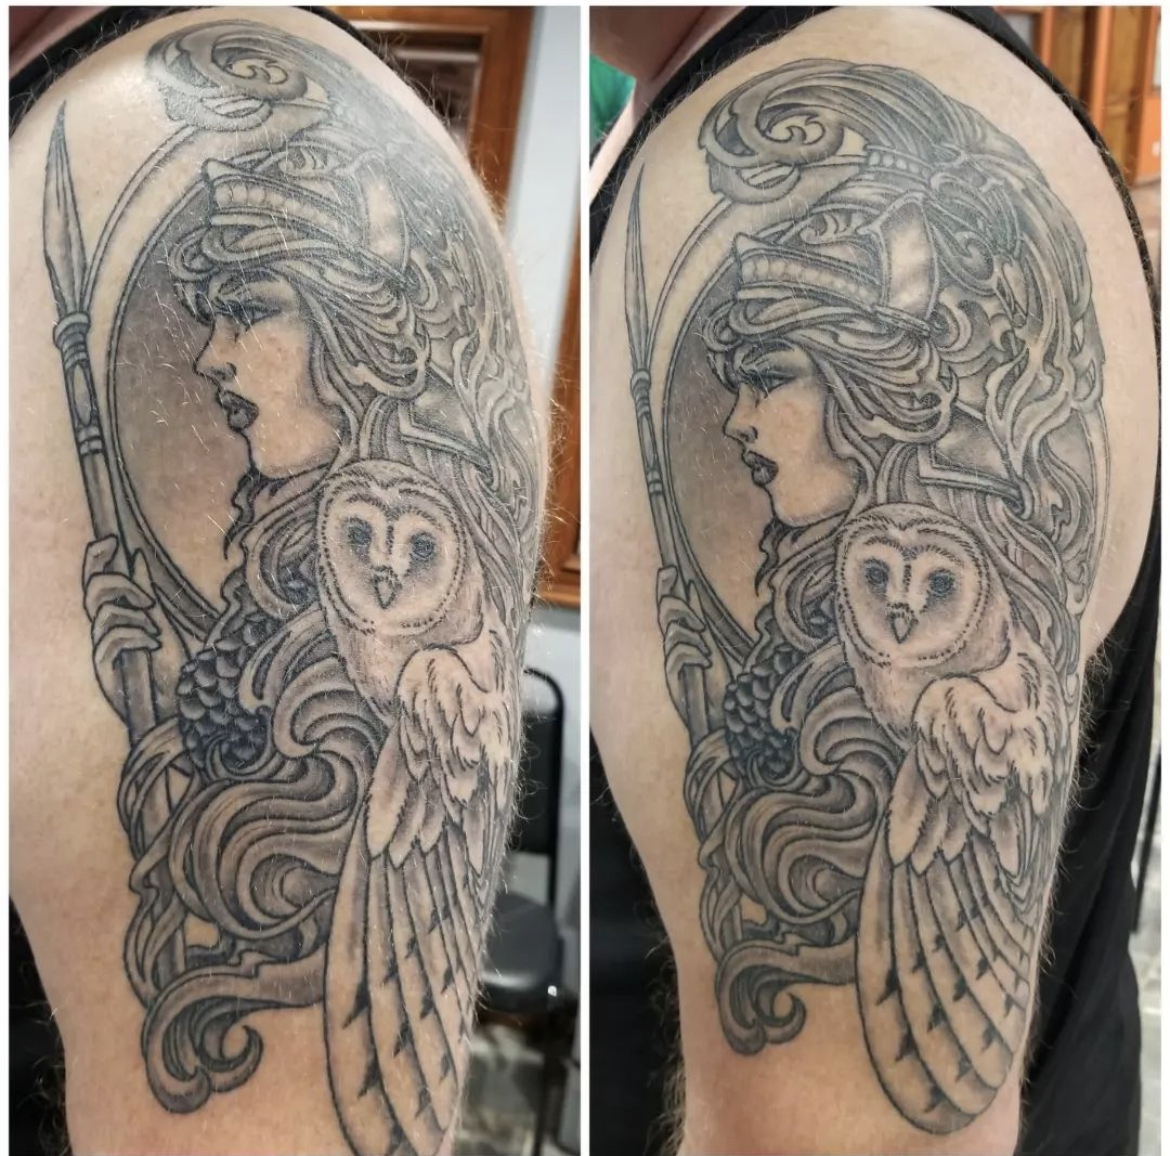 Dave Husselbee - Tattoo Angus - Manchester, NH | Custom Tattoos